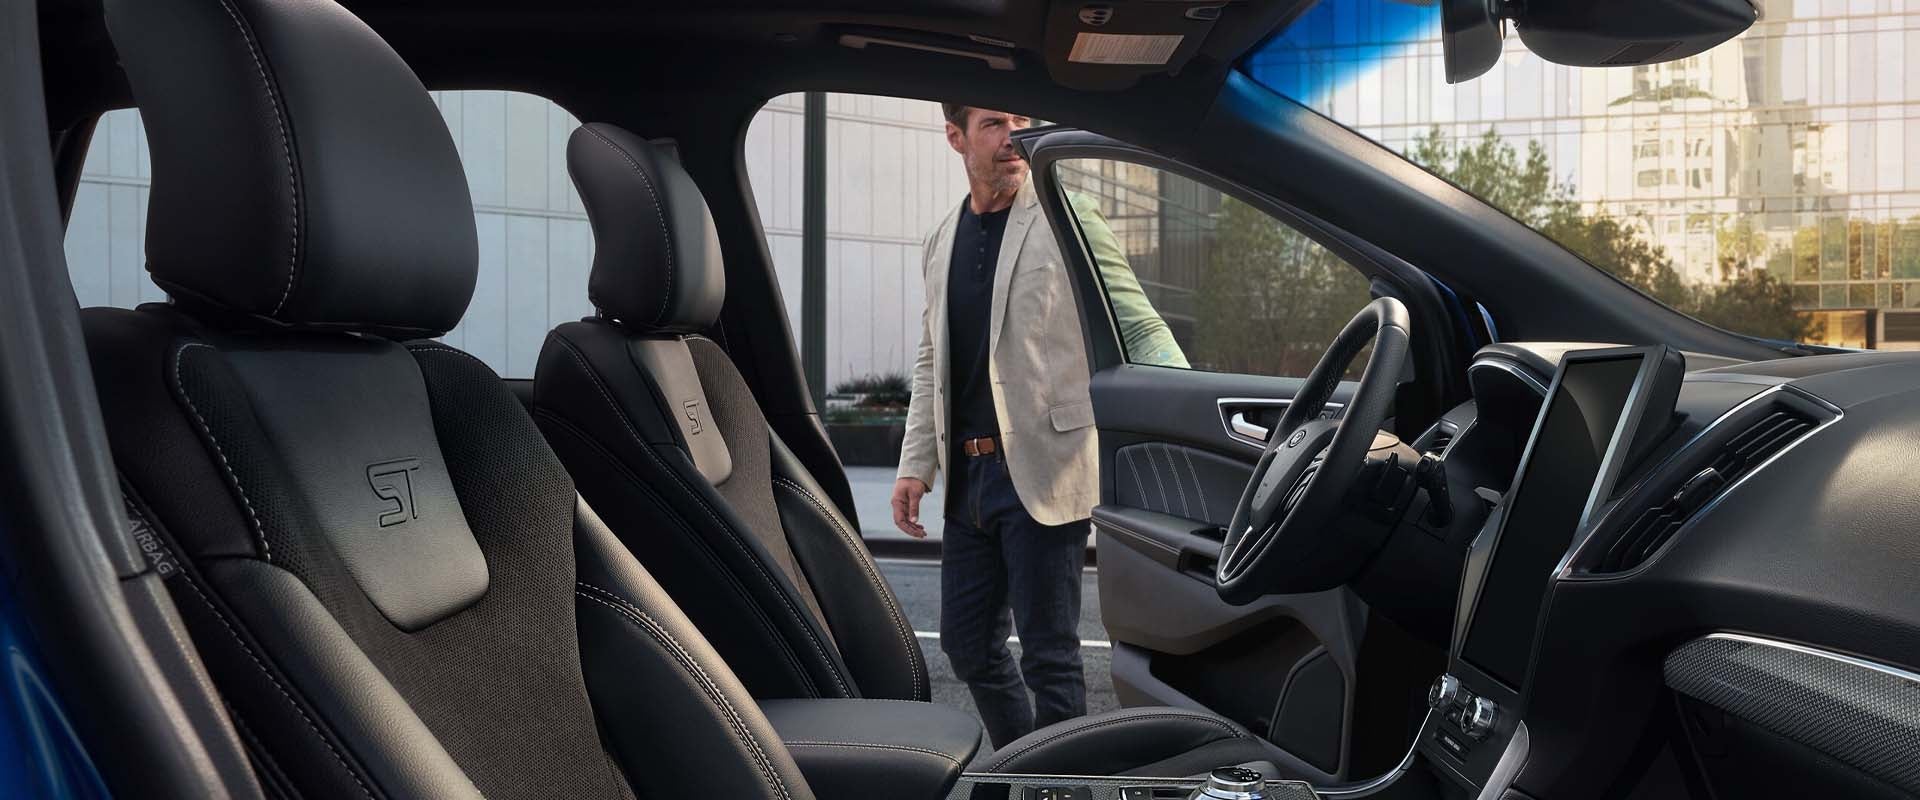 2021 Ford Edge interior